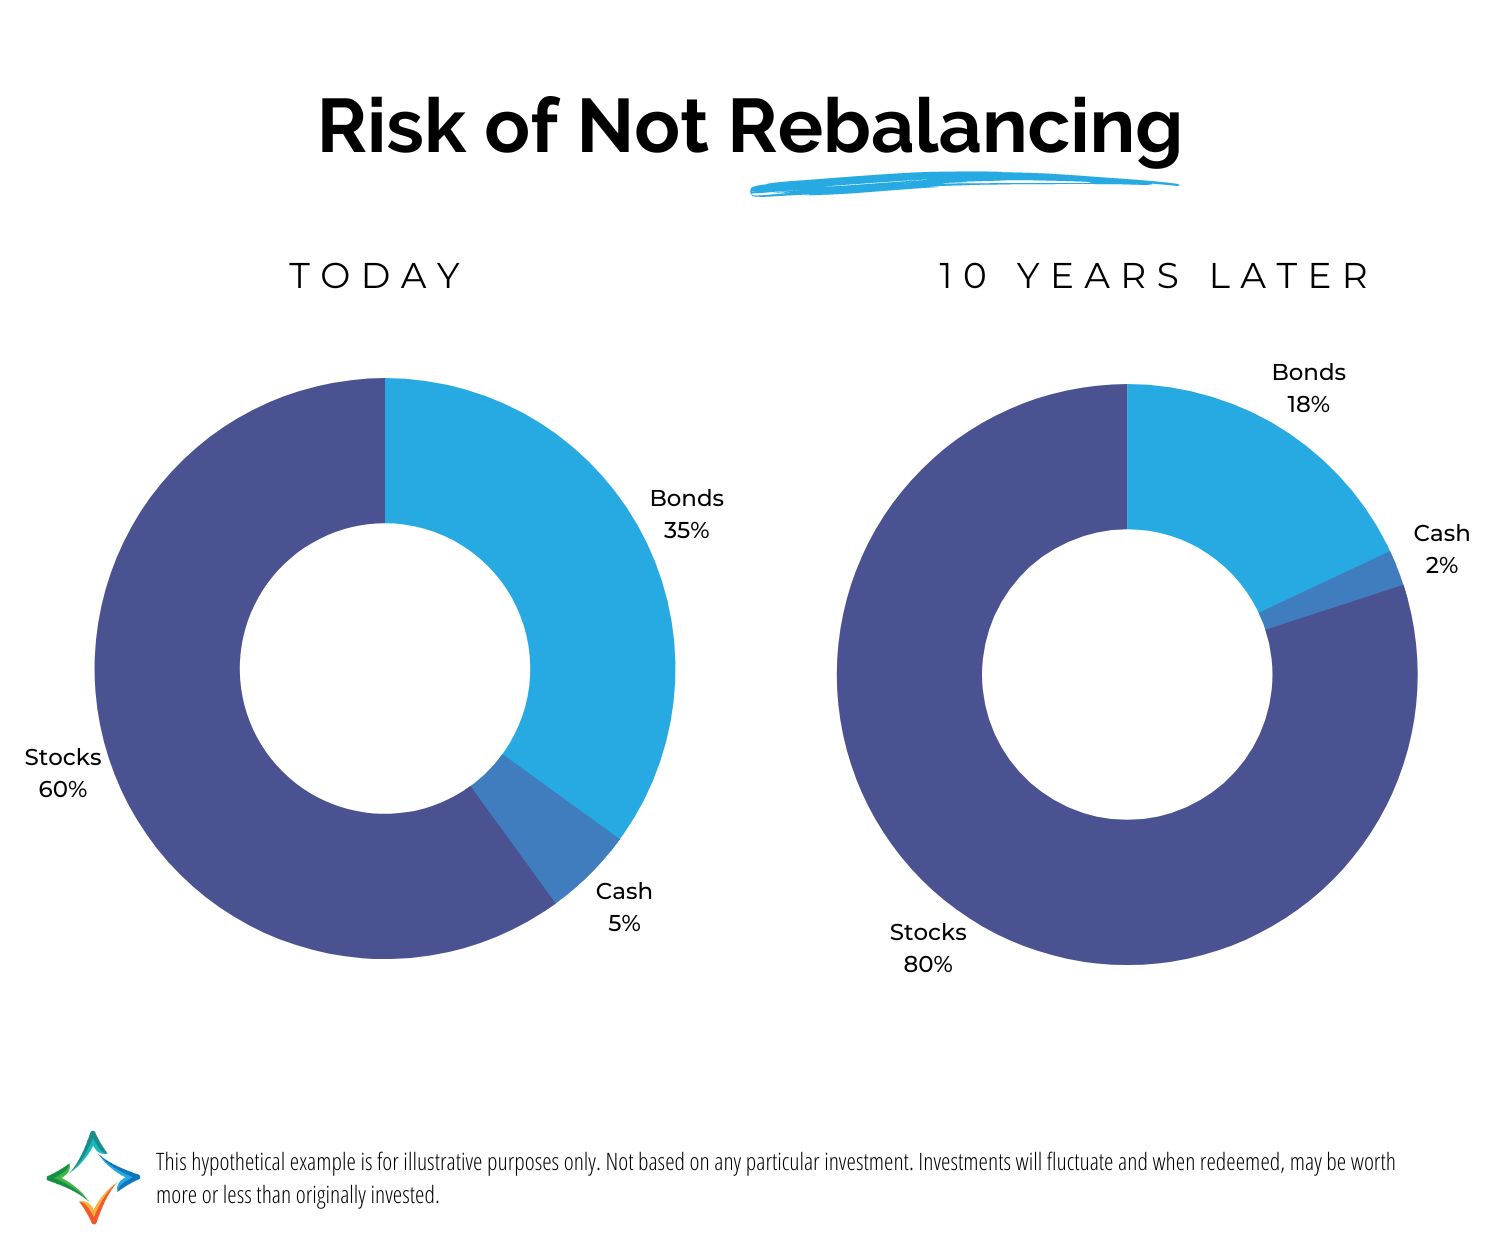 The risk of not rebalancing your portfolio